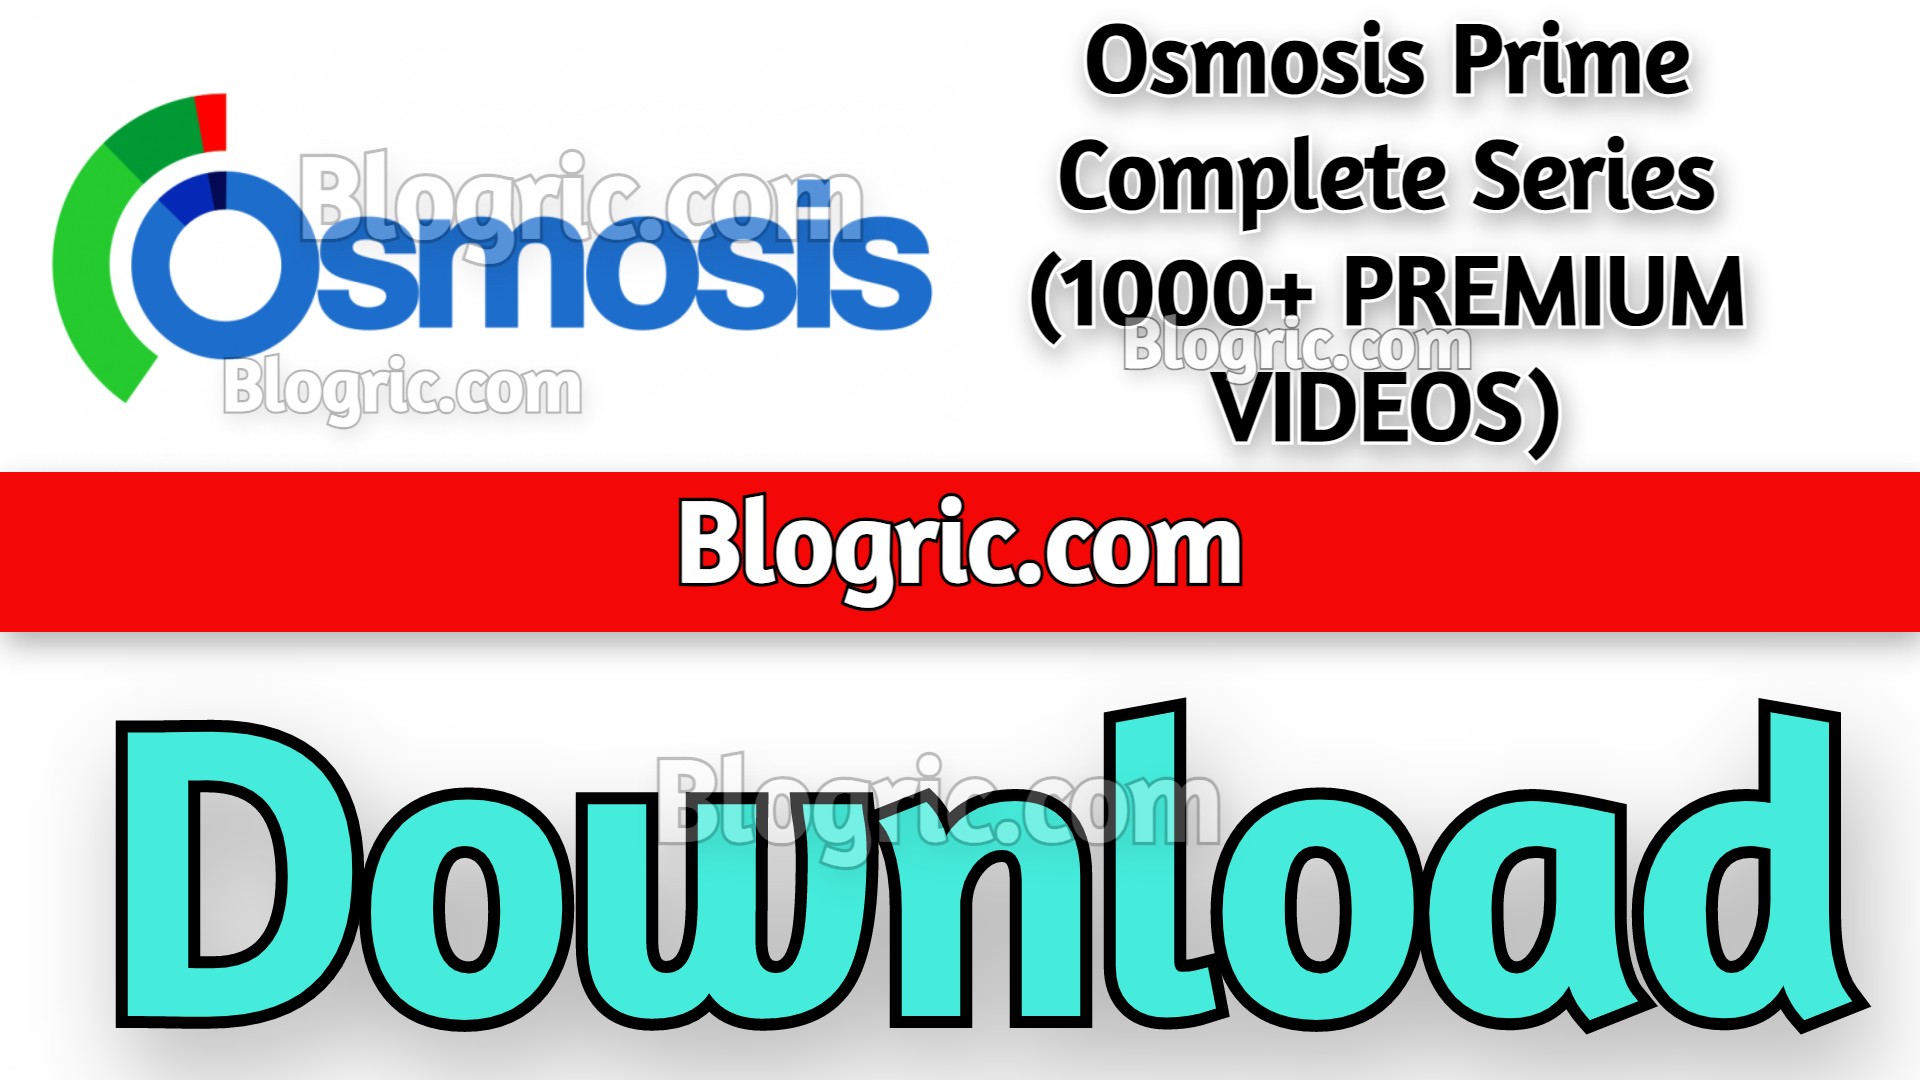 Osmosis Prime Complete Series (1000+ PREMIUM VIDEOS) Free Download 2022